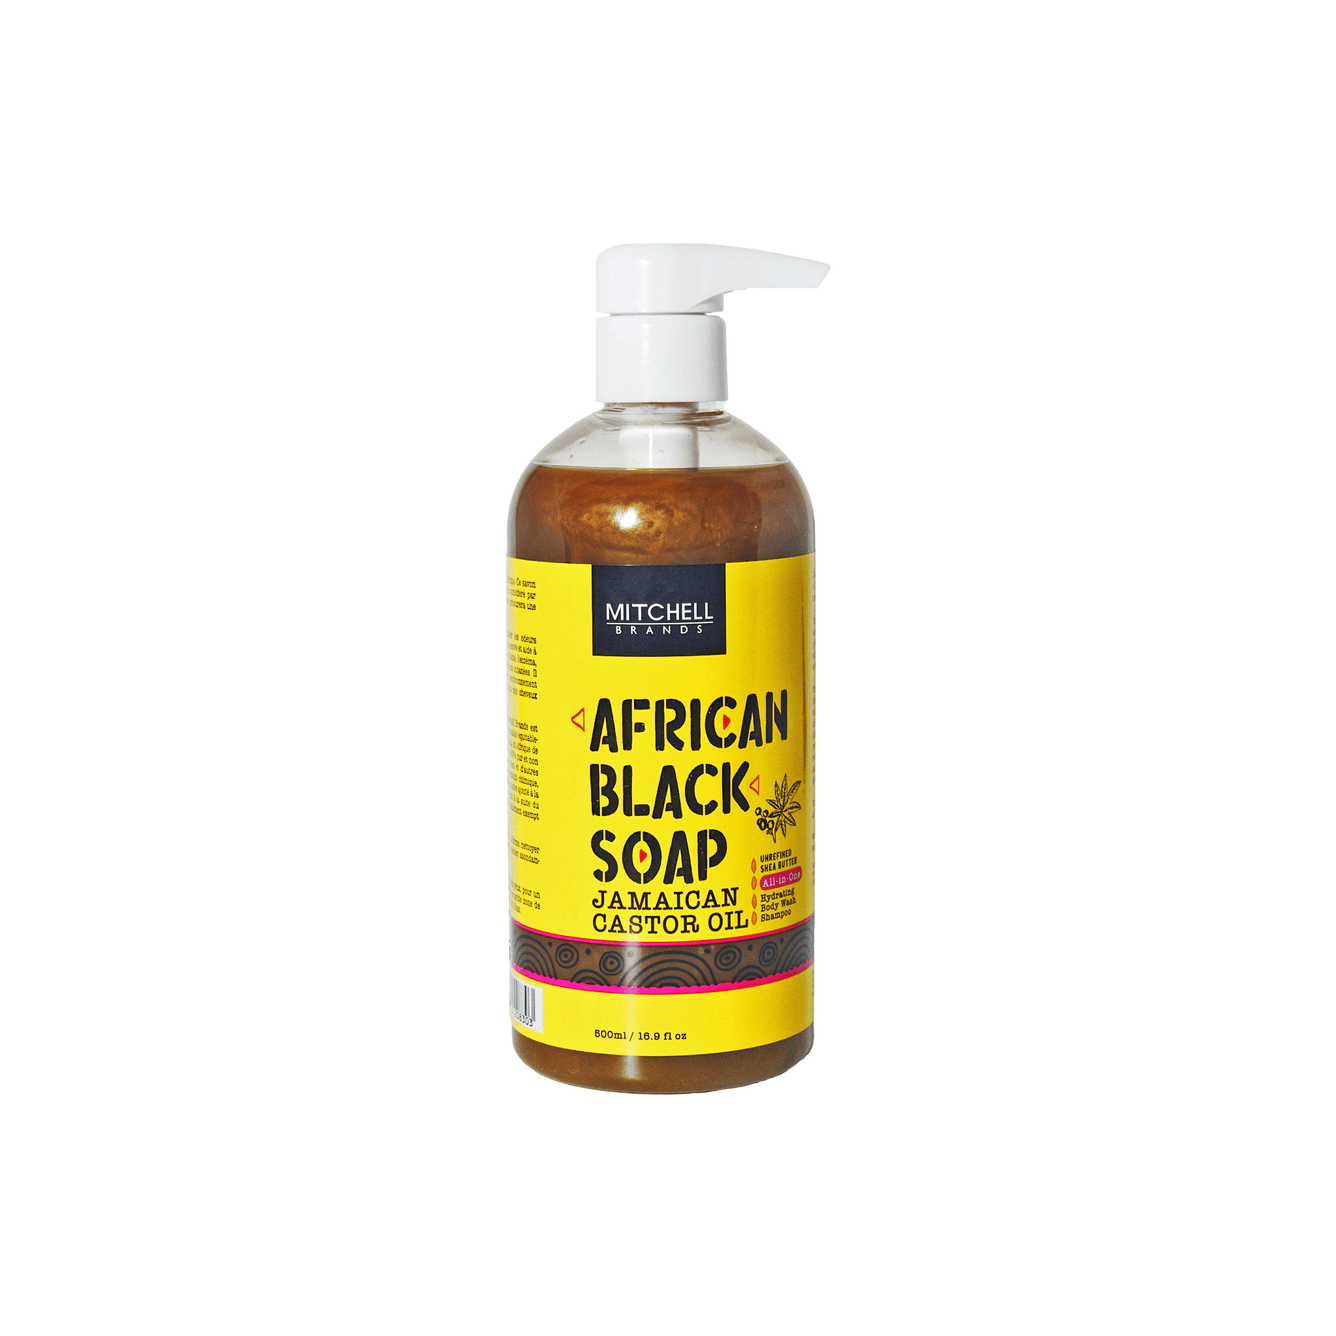 African Liquid Black Soap with Jamaican Castor Oil 500 ml (New) Mitchell Brands - Mitchell Brands - Skin Lightening, Skin Brightening, Fade Dark Spots, Shea Butter, Hair Growth Products